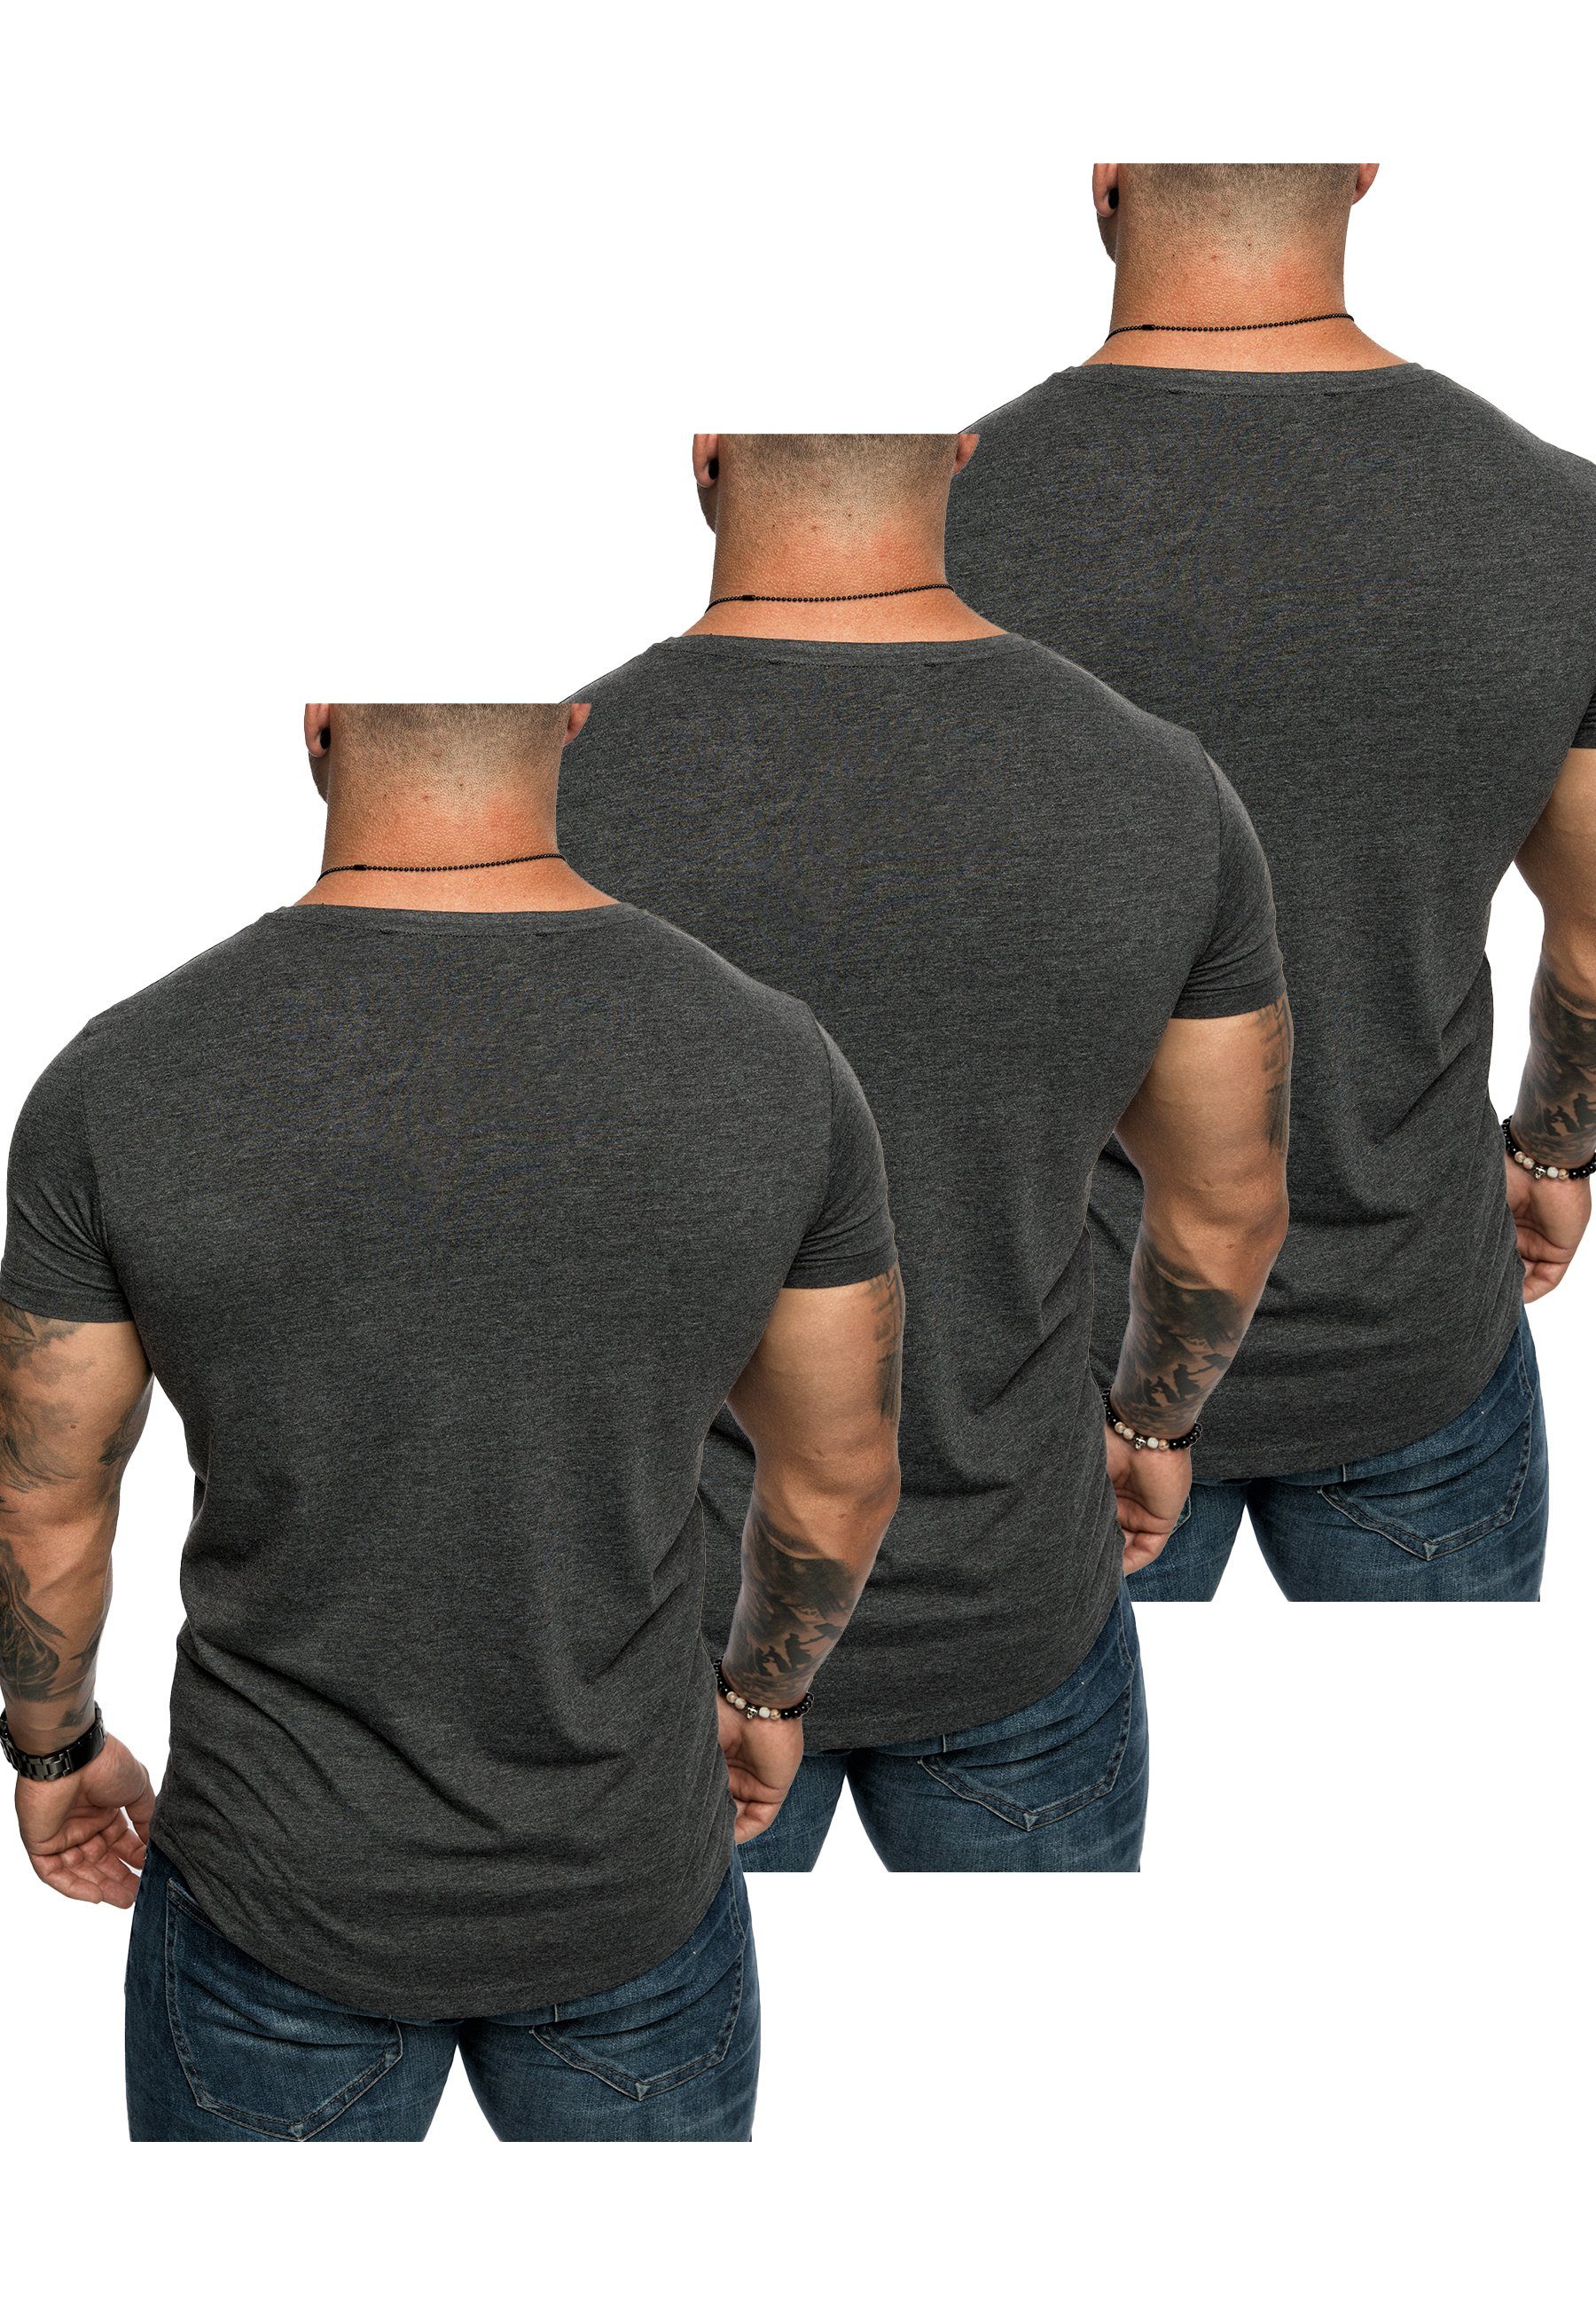 T-Shirt Herren T-Shirts BELLEVUE Amaci&Sons Oversize 3er-Pack (3x mit V-Ausschnitt (3er-Pack) 3. T-Shirt Basic Anthrazit)